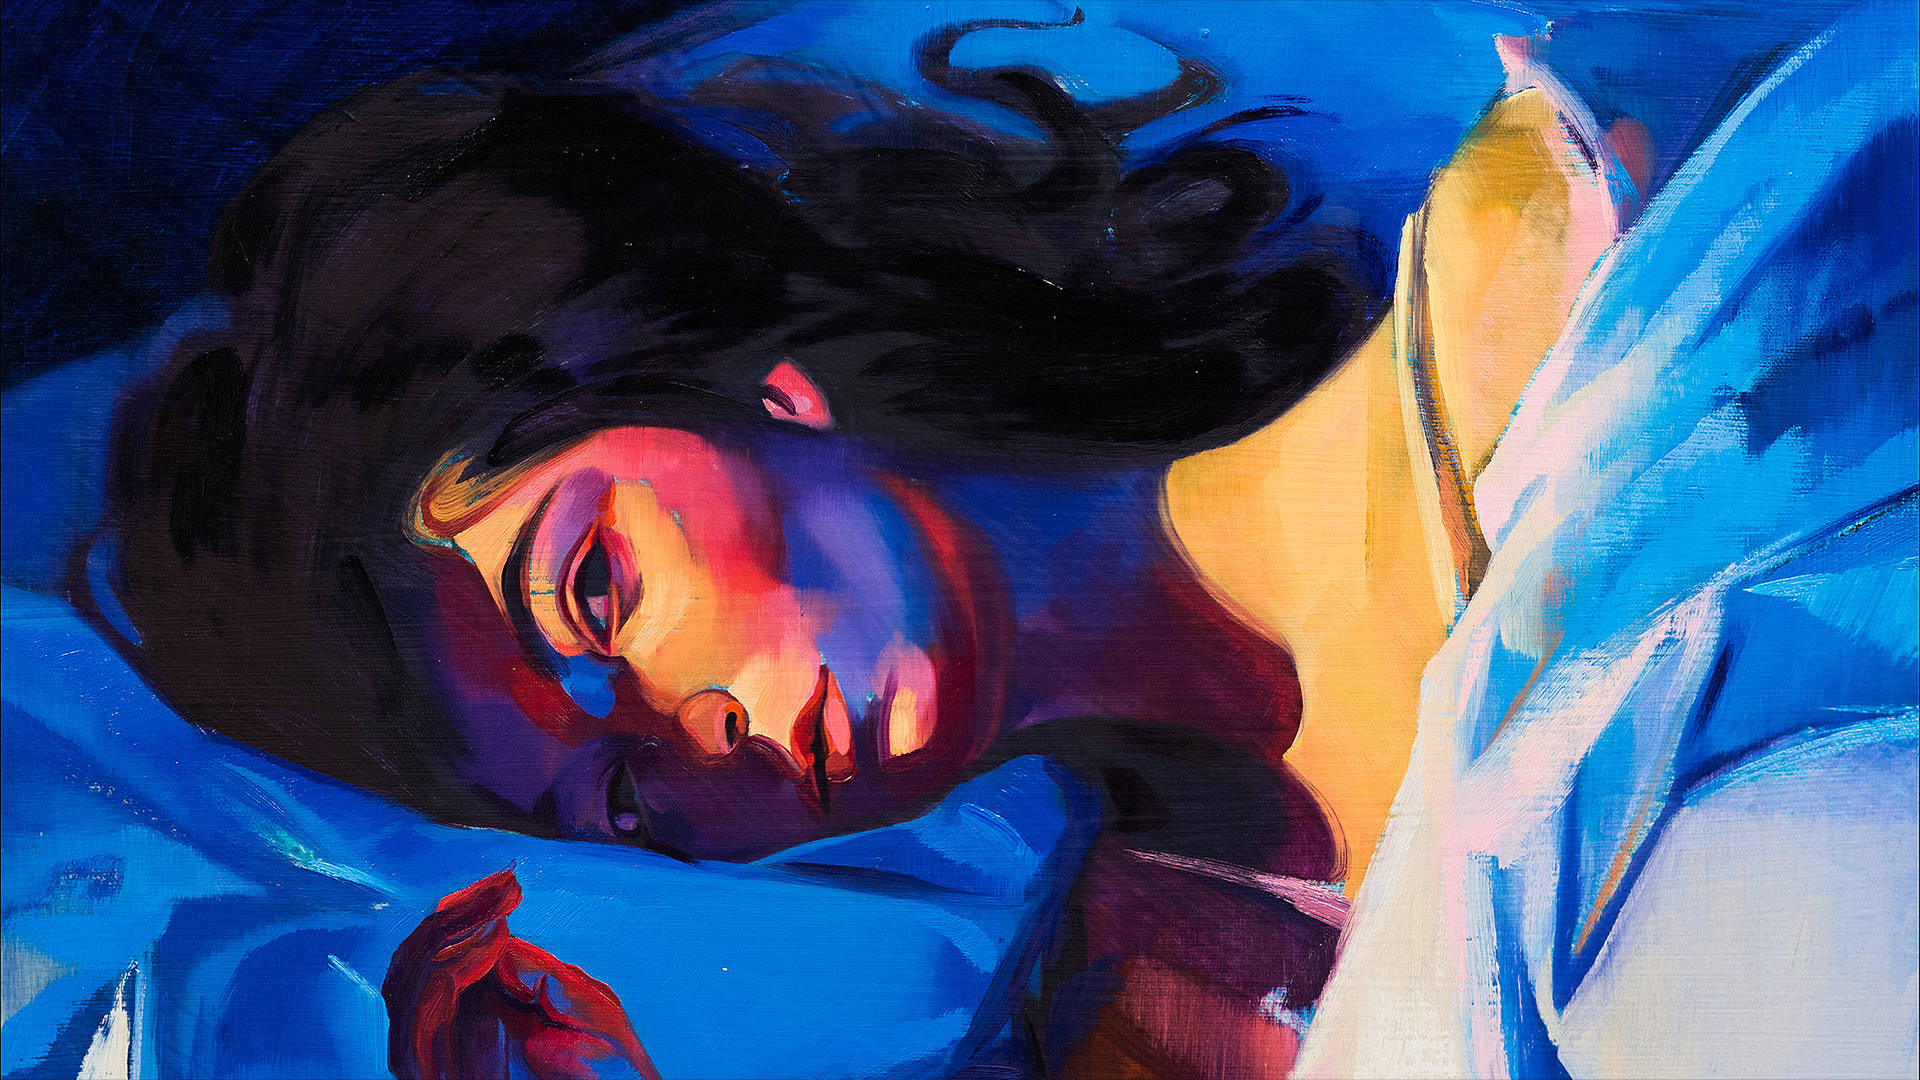 Lorde's Melodrama Album Artwork Background